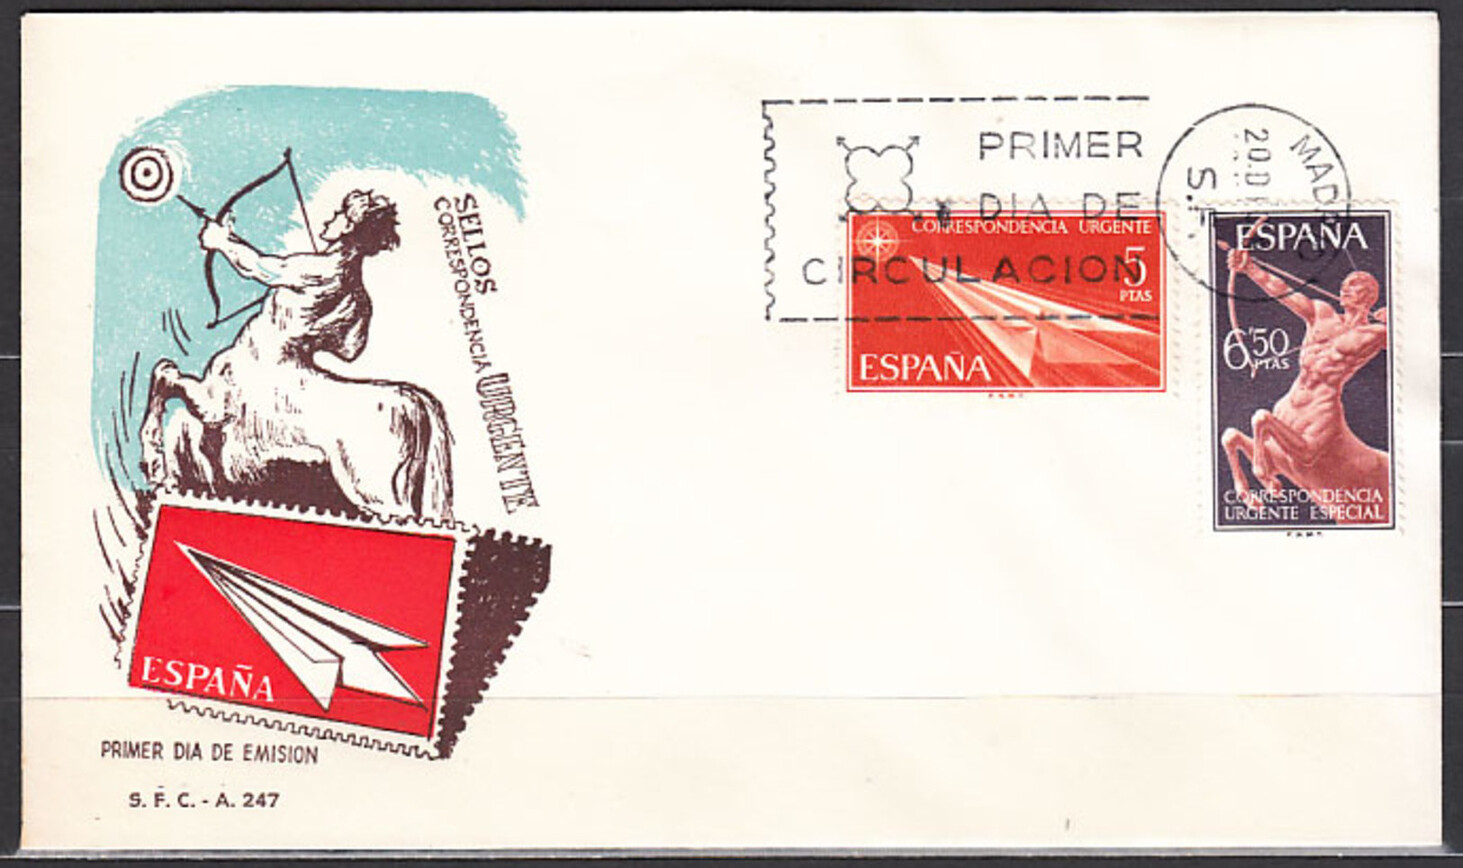 Spain 1966 Correspondencia Urgente - dart (5p) (FDC)